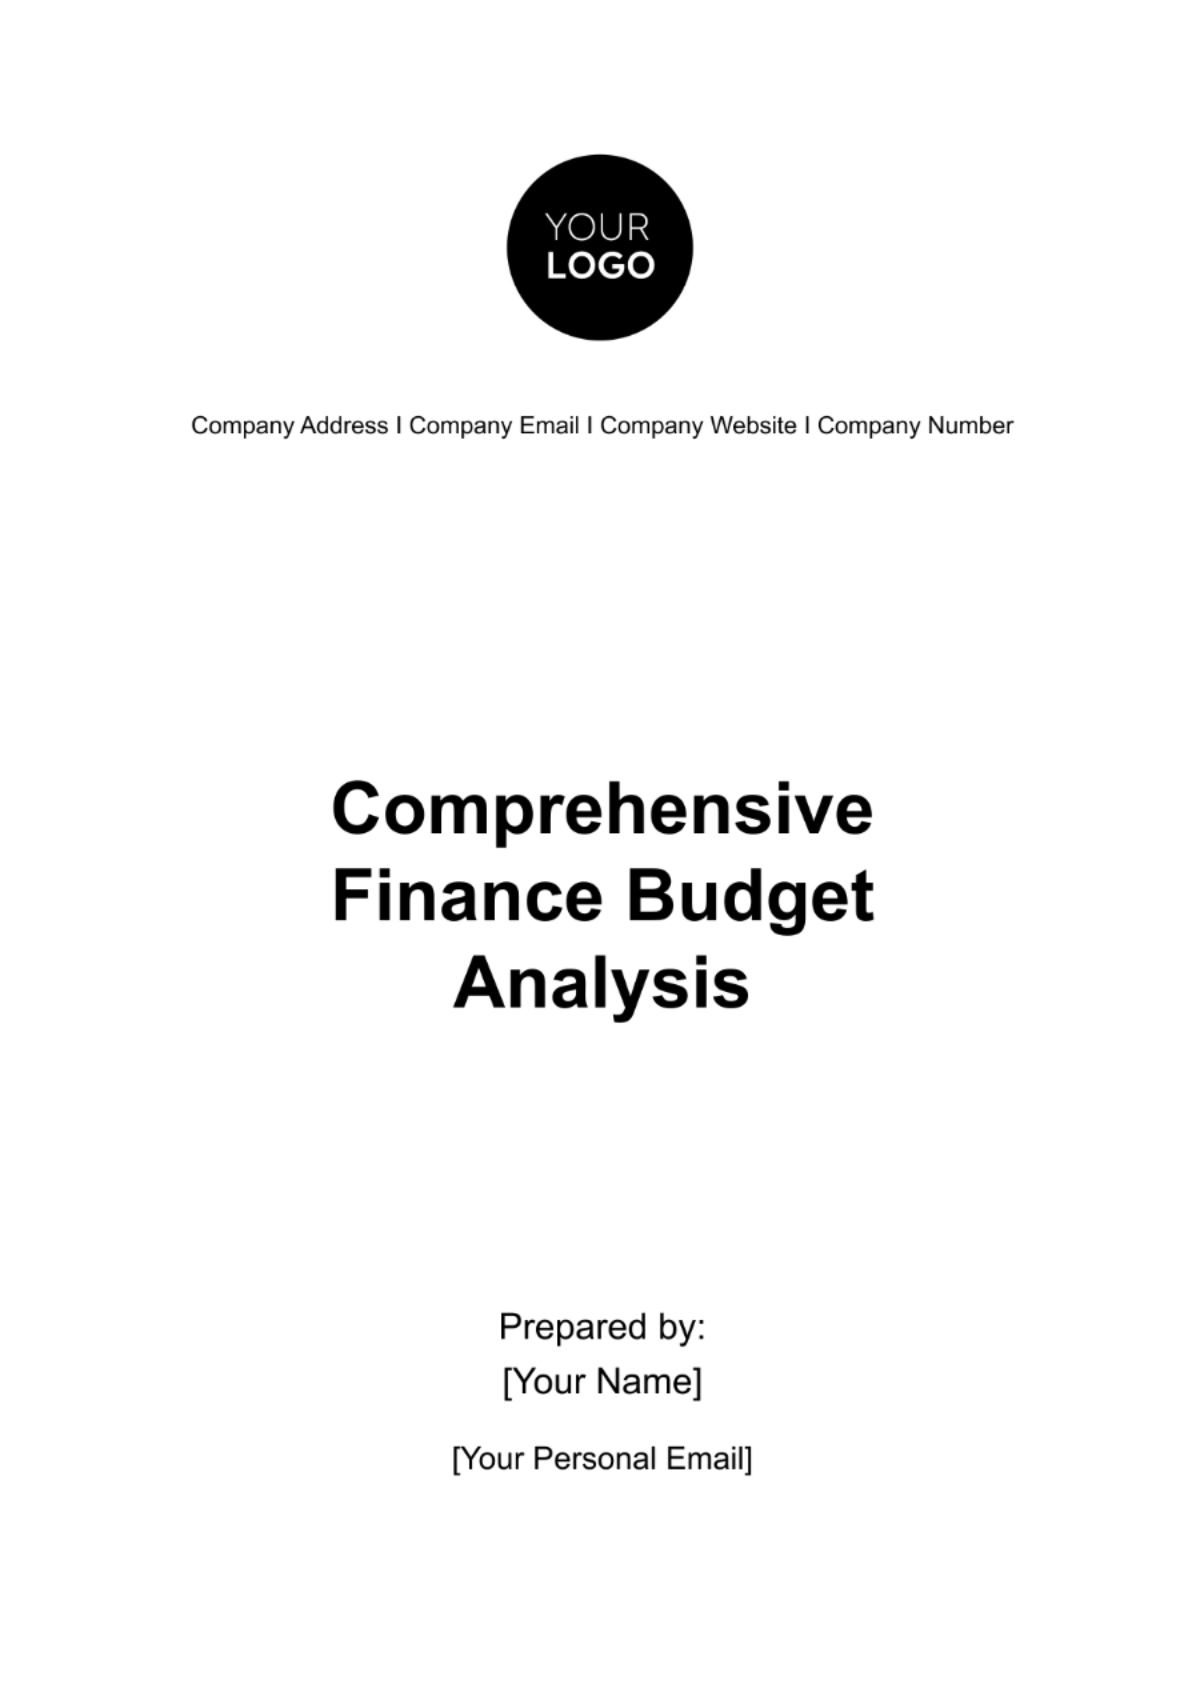 Comprehensive Finance Budget Analysis Template